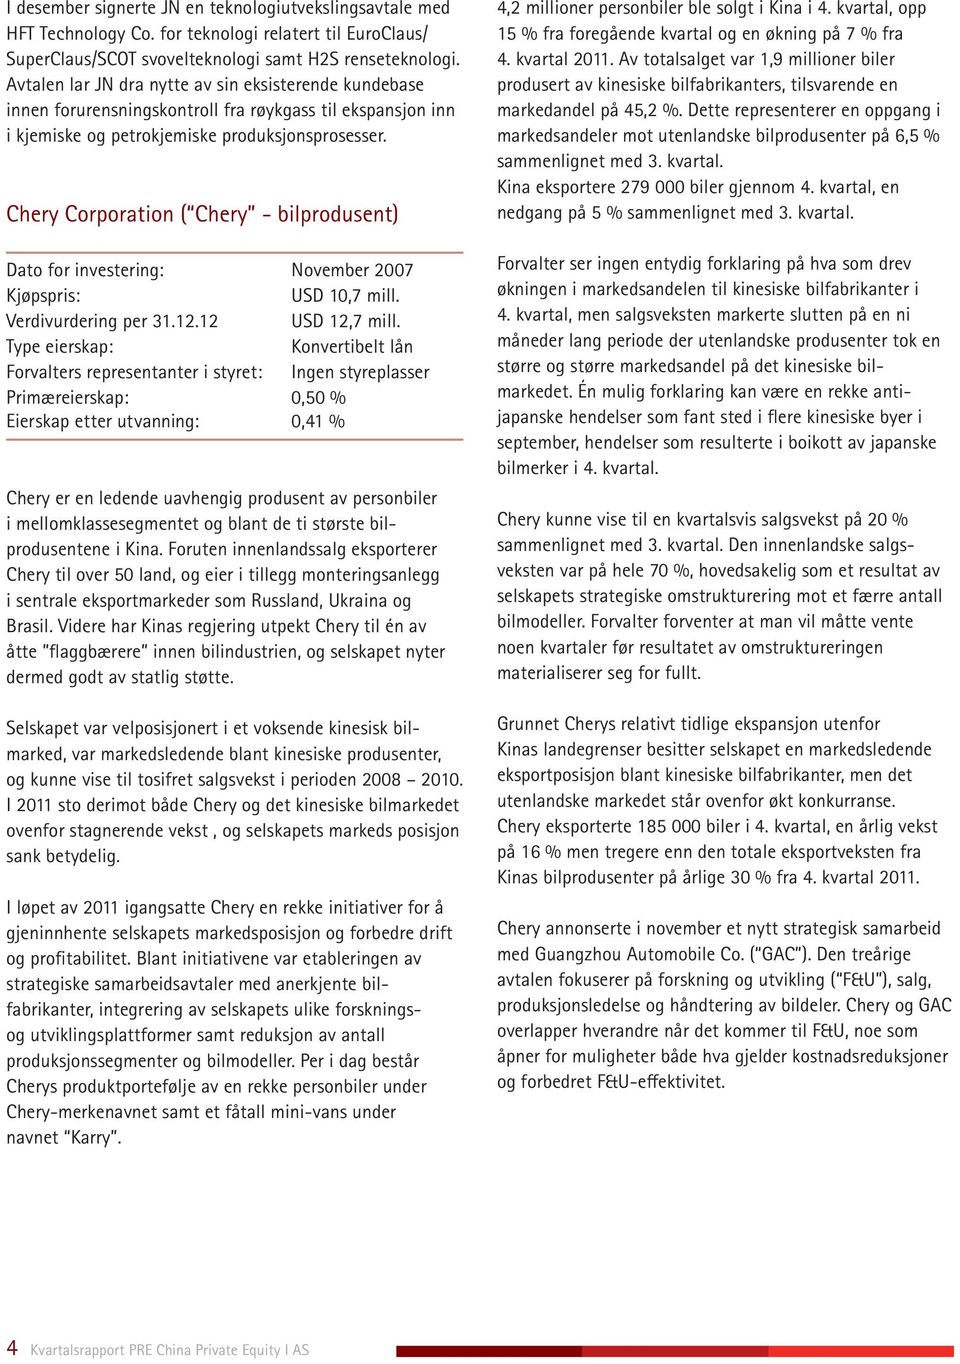 Chery Corporation ( Chery - bilprodusent) Dato for investering: November 2007 USD 10,7 mill. Verdivurdering per 31.12.12 USD 12,7 mill.